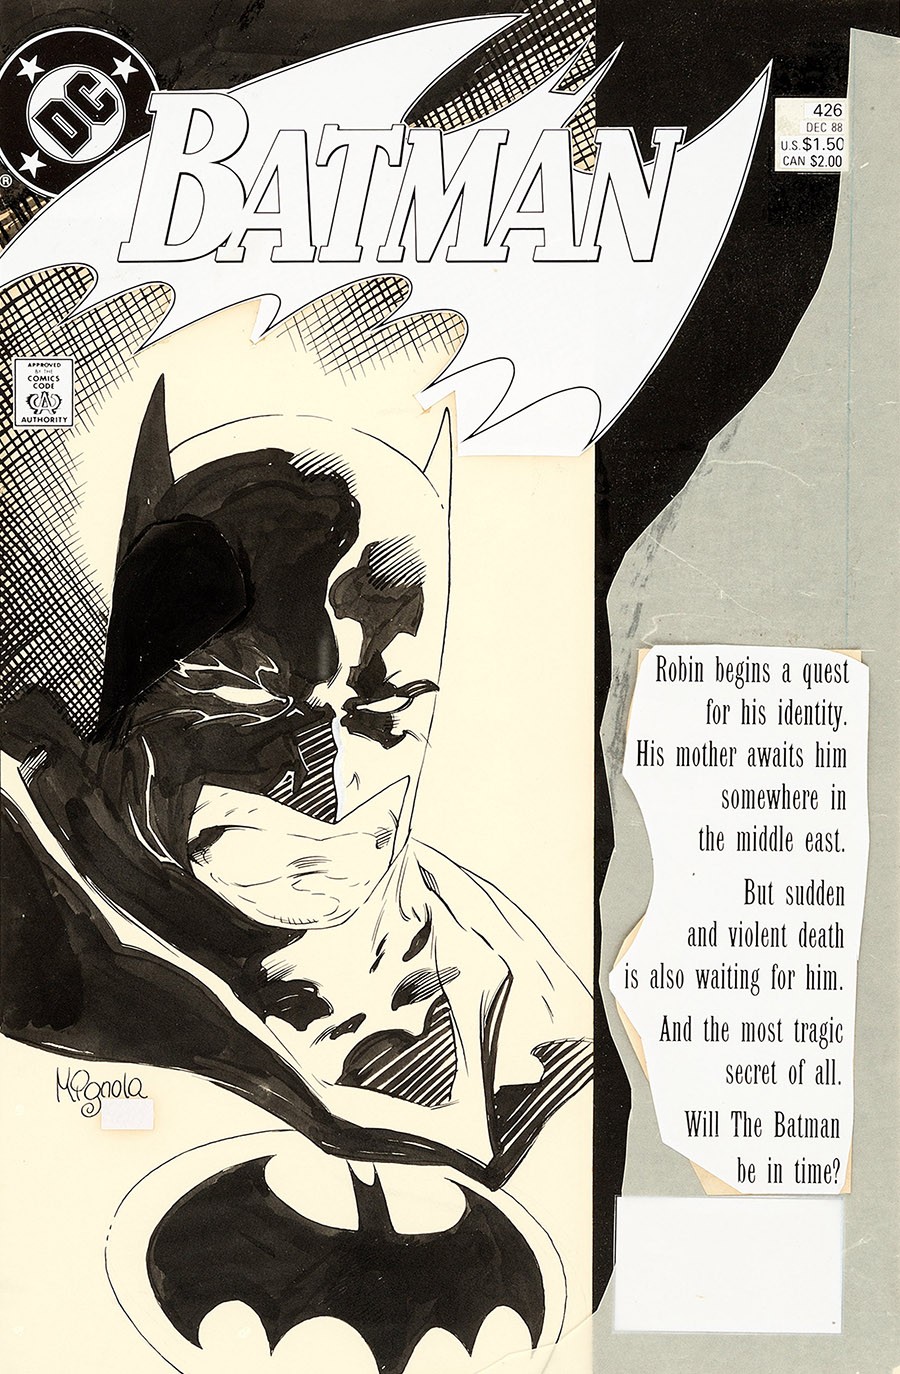 Cover art for “Batman,” no.426, December 1988